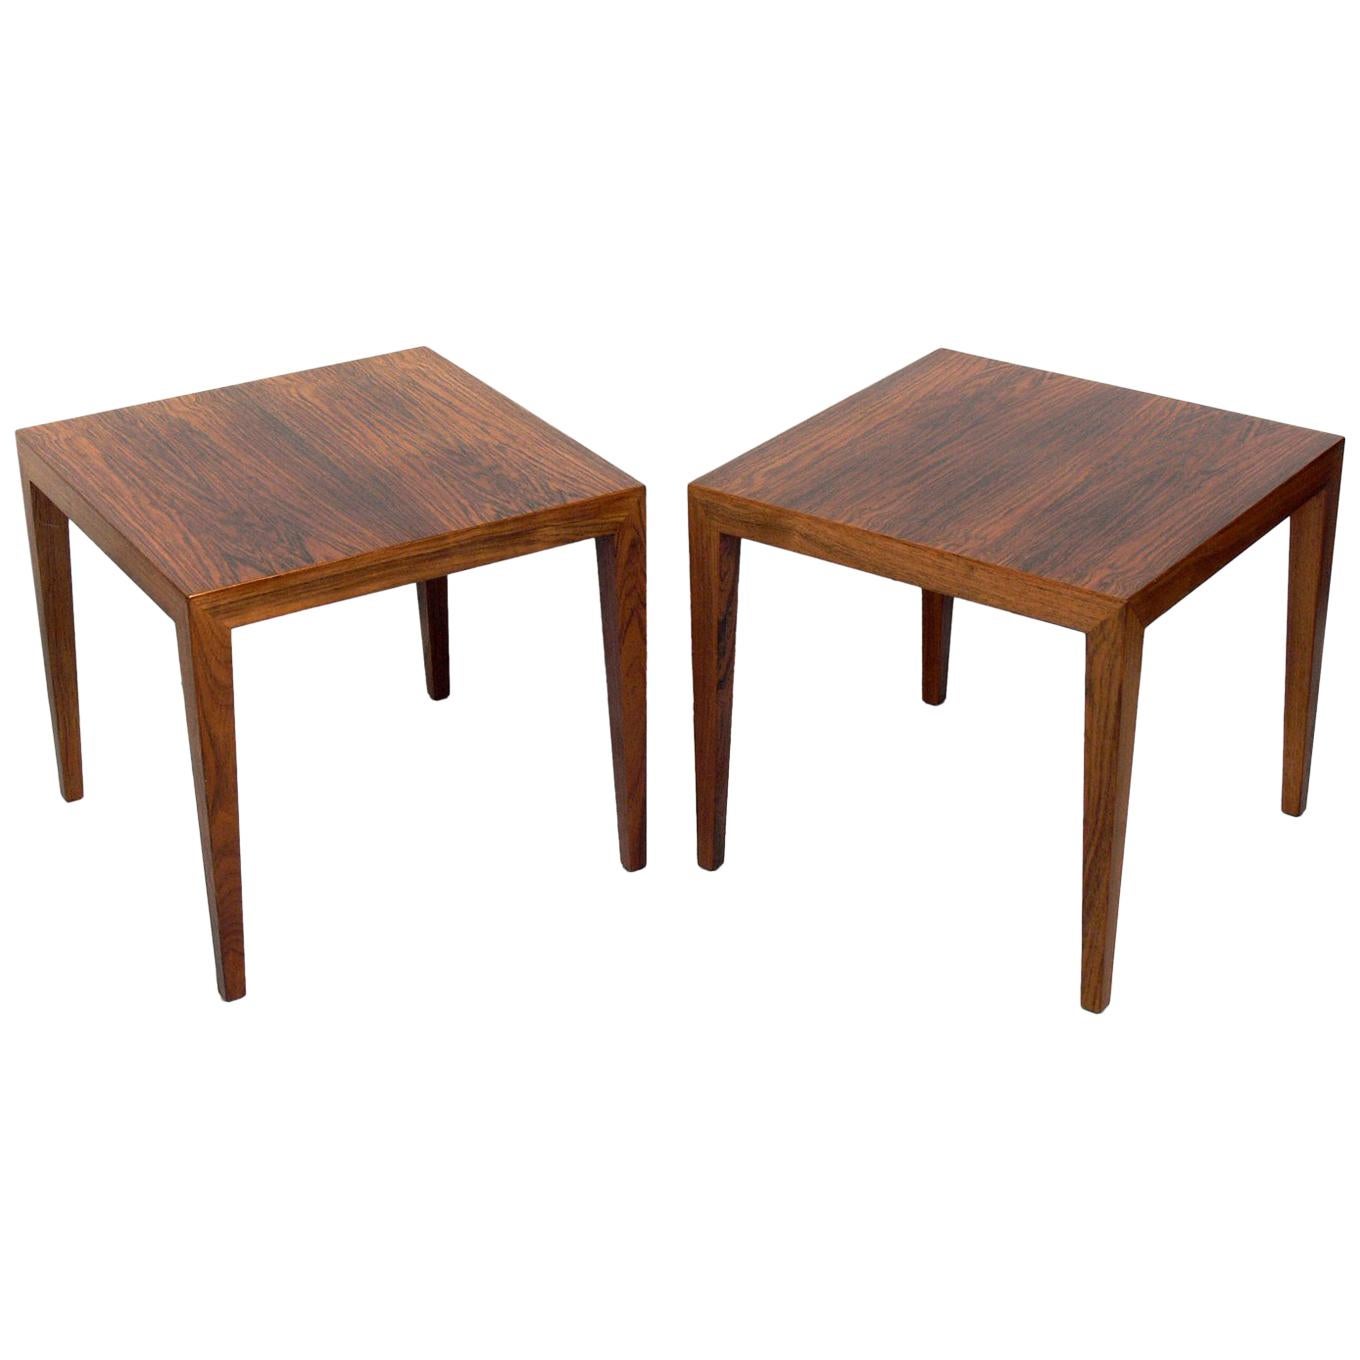 Pair of Danish Modern Rosewood Tables by Severin Hansen